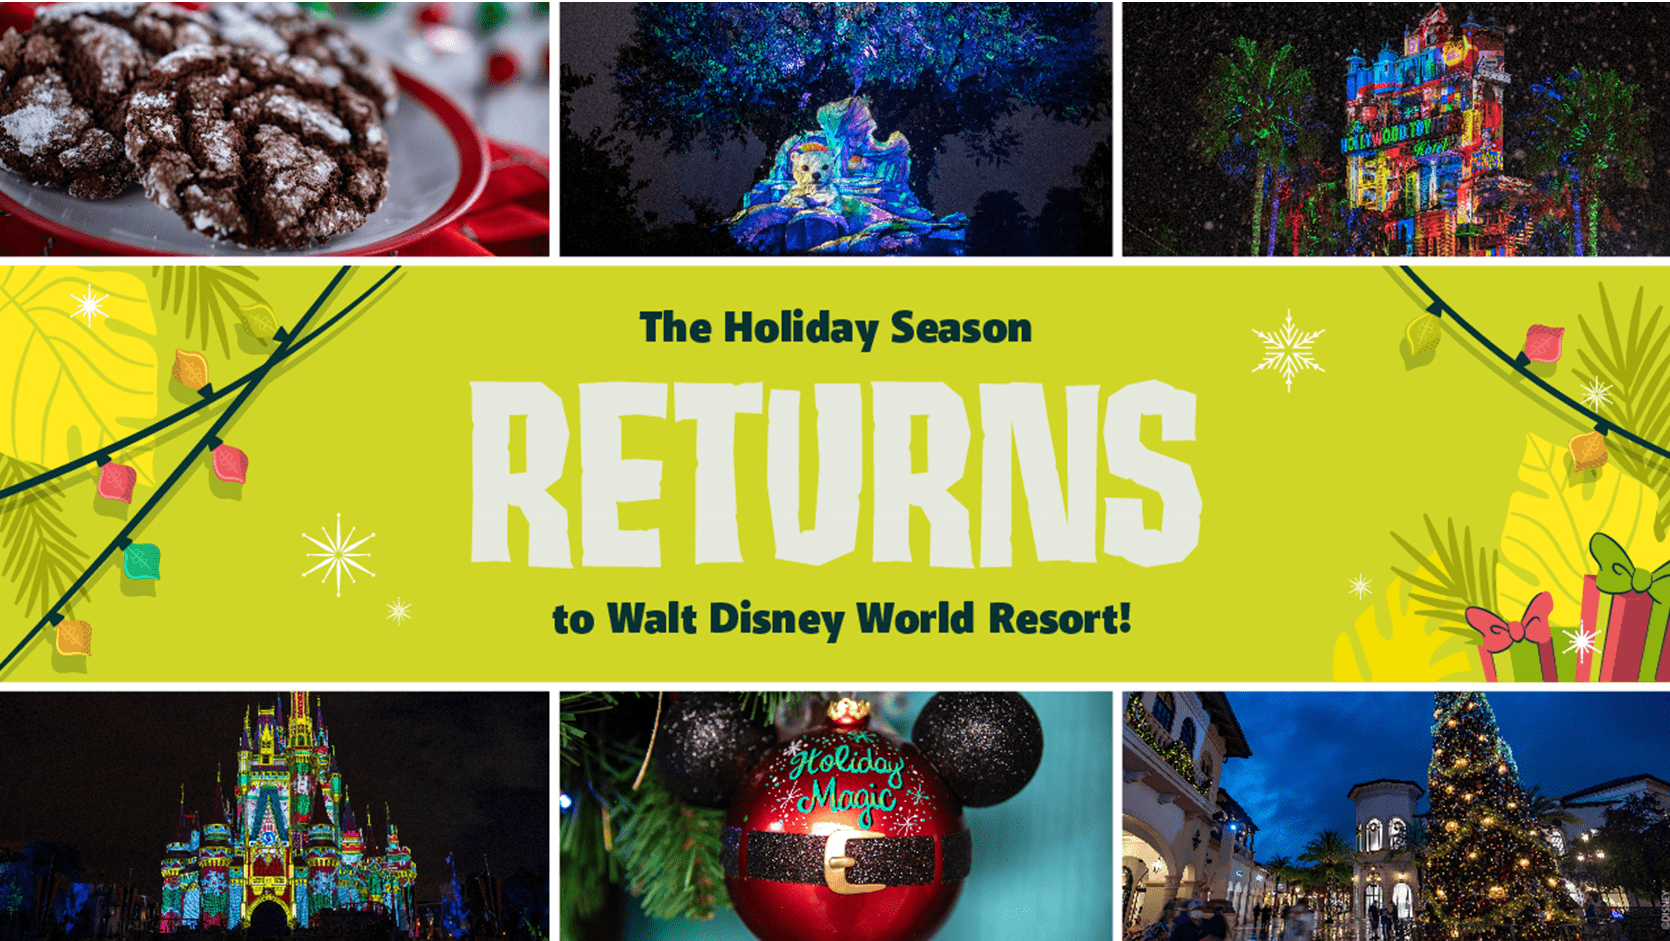 The Holiday Season Returns to the Walt Disney World Resort!